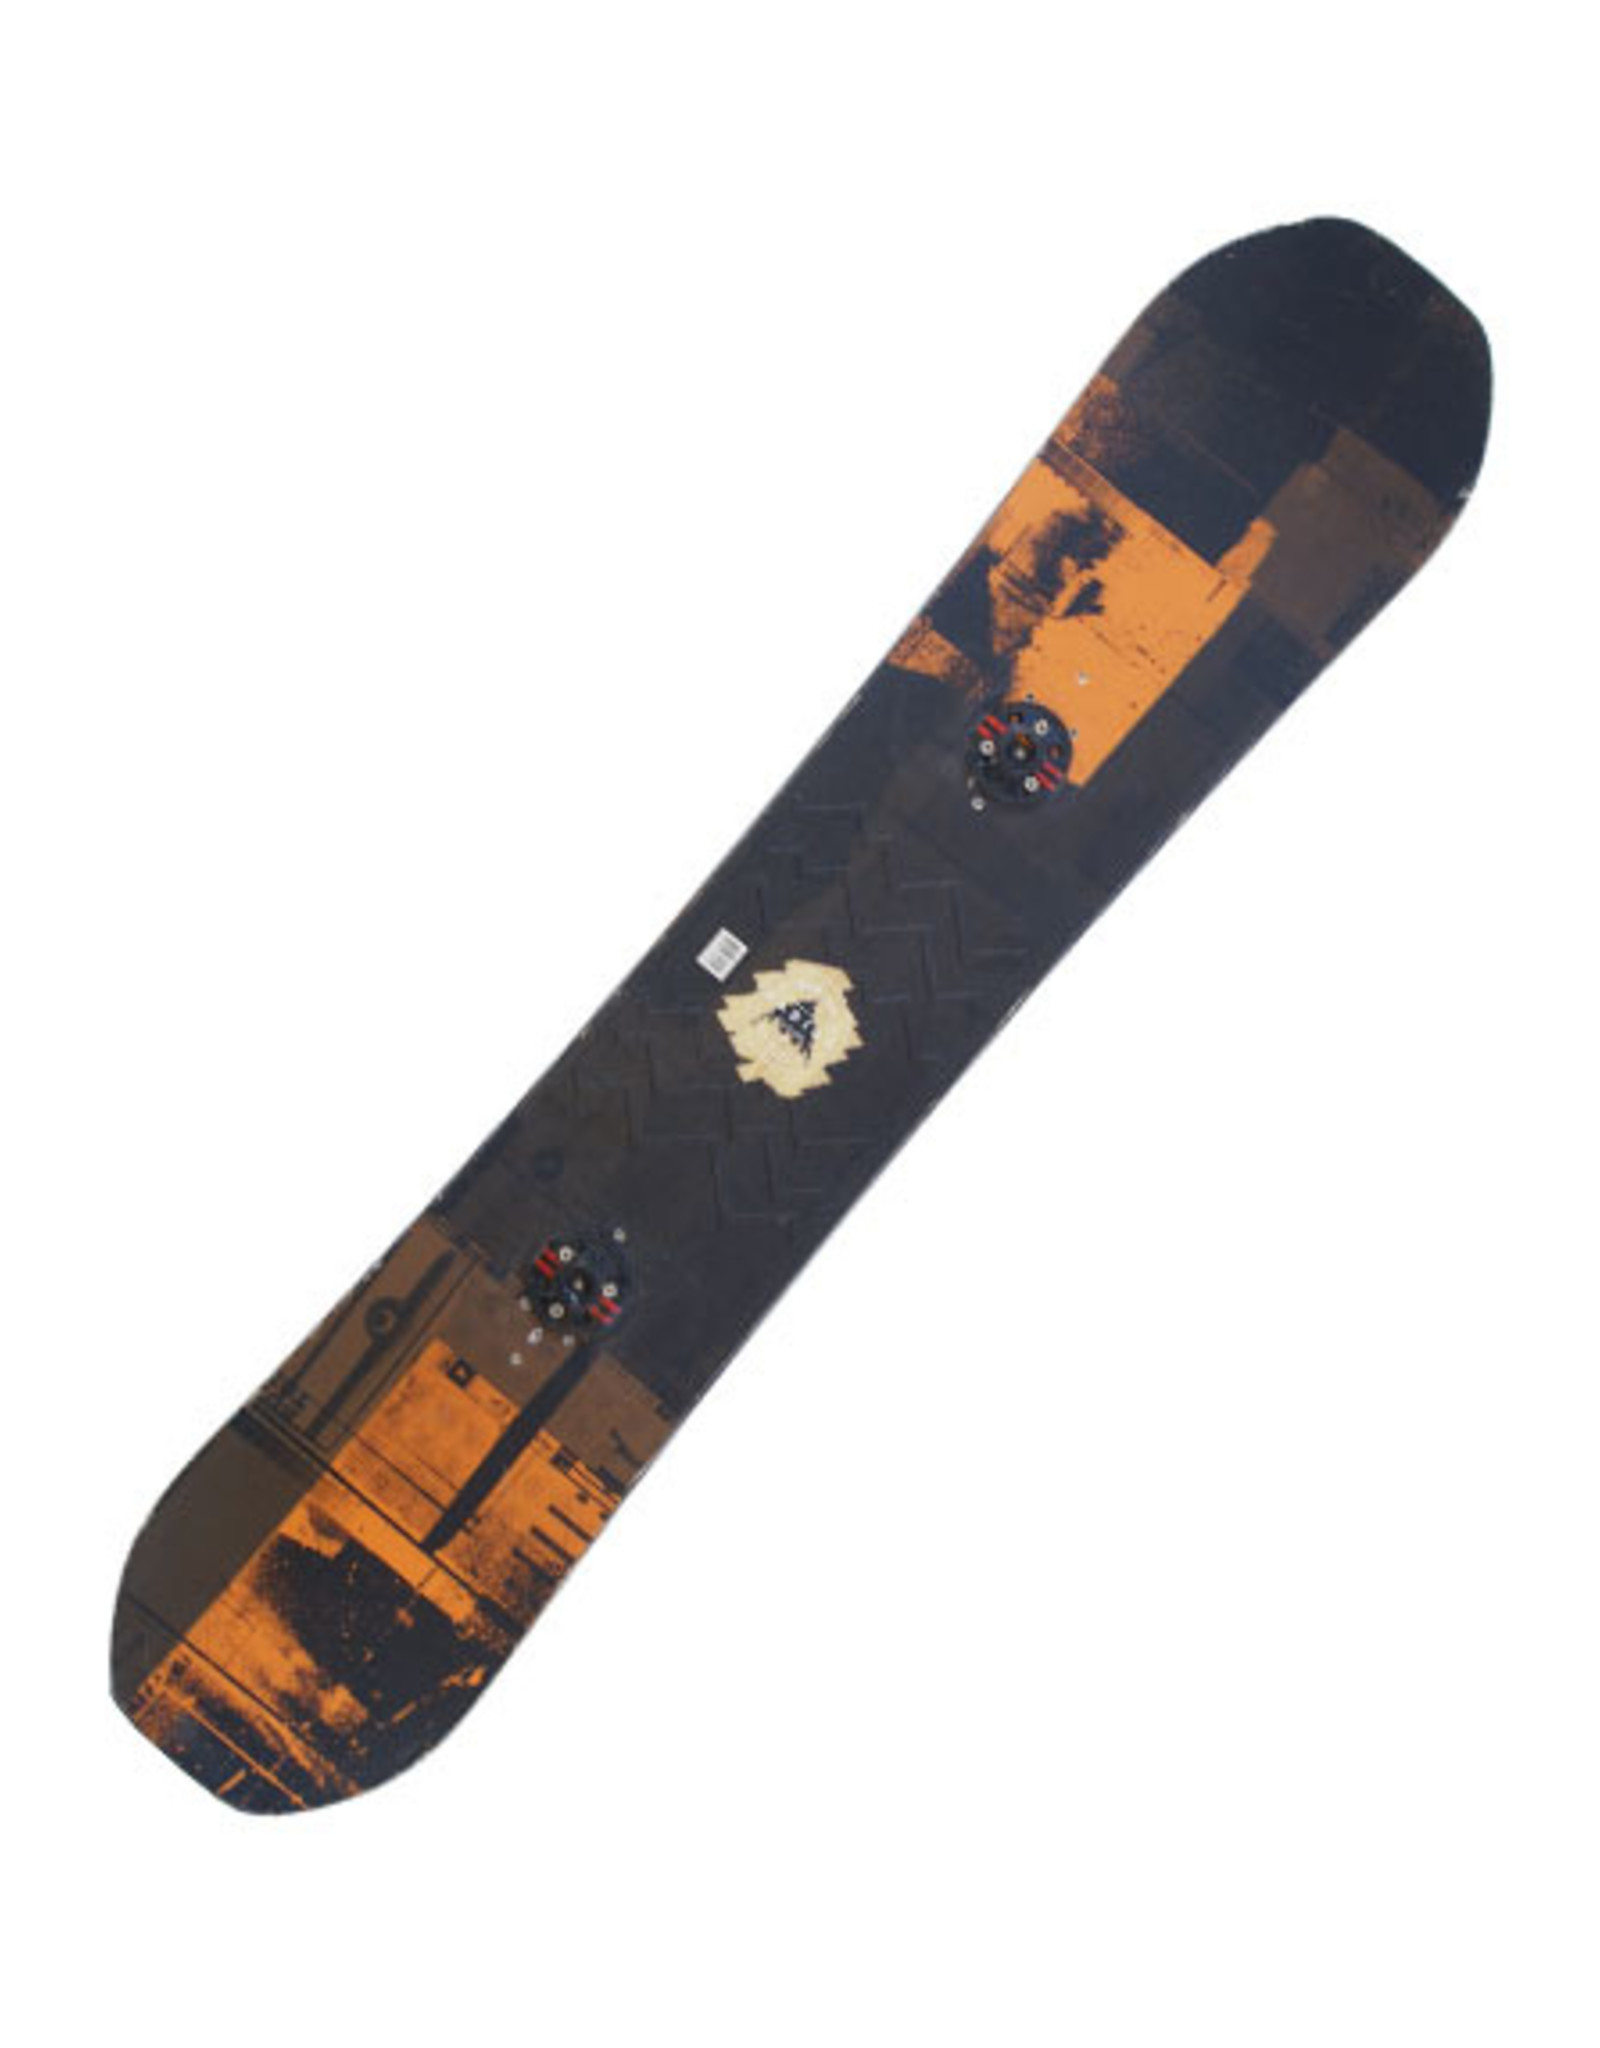 BURTON BURTON RADIUS, Rocker Snowboard Orange Gebruikt 150cm